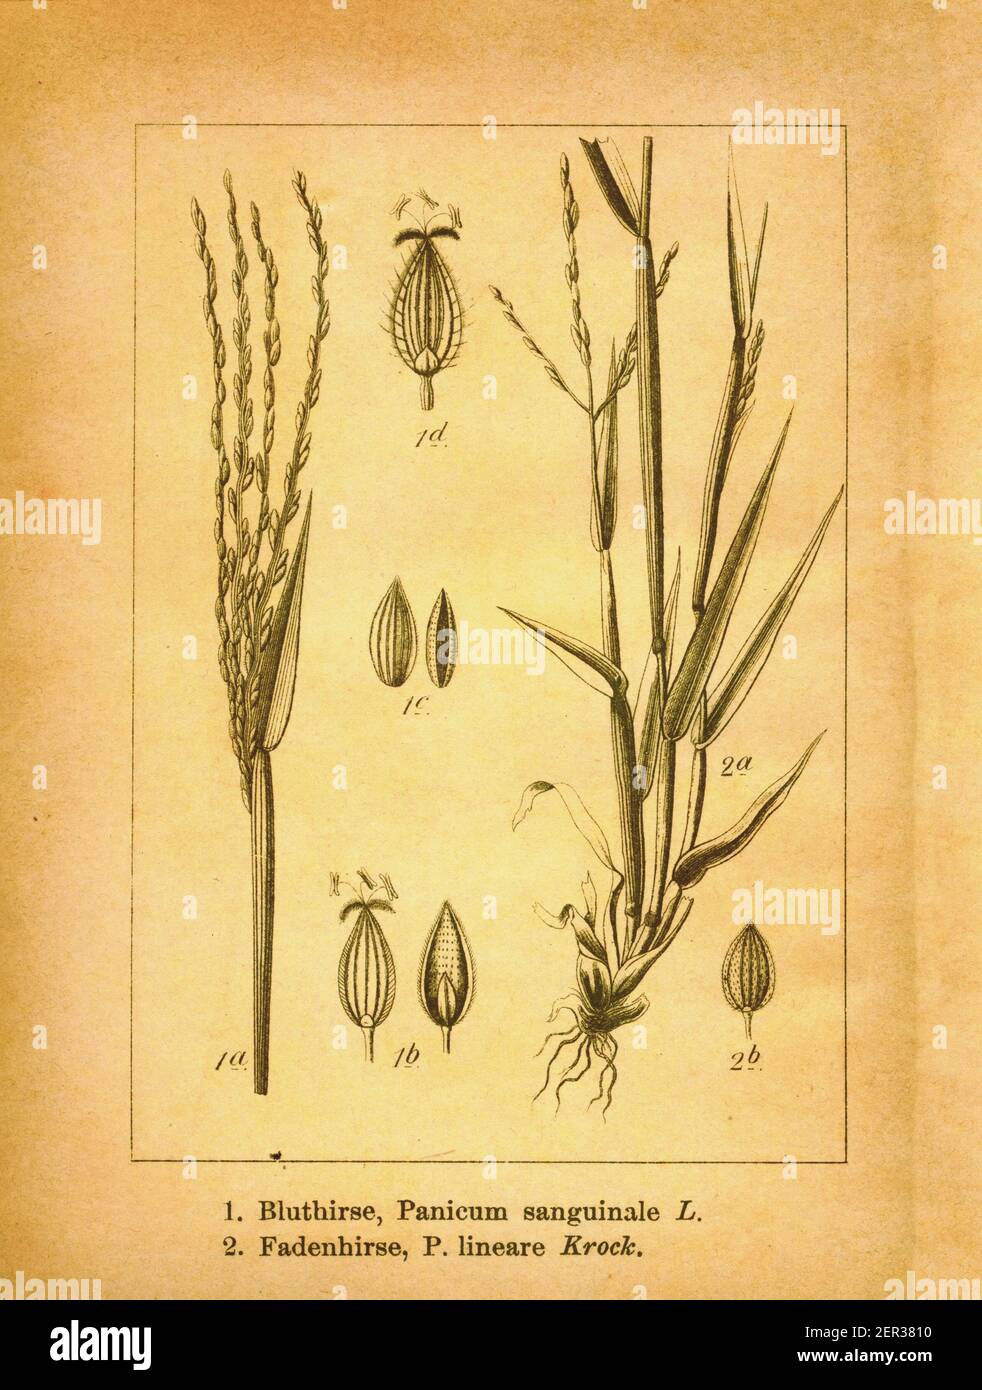 Antique engraving of hairy crabgrass and panicgrass. Illustration by Jacob Sturm (1771-1848) from the book Deutschlands Flora in Abbildungen nach der Stock Photo